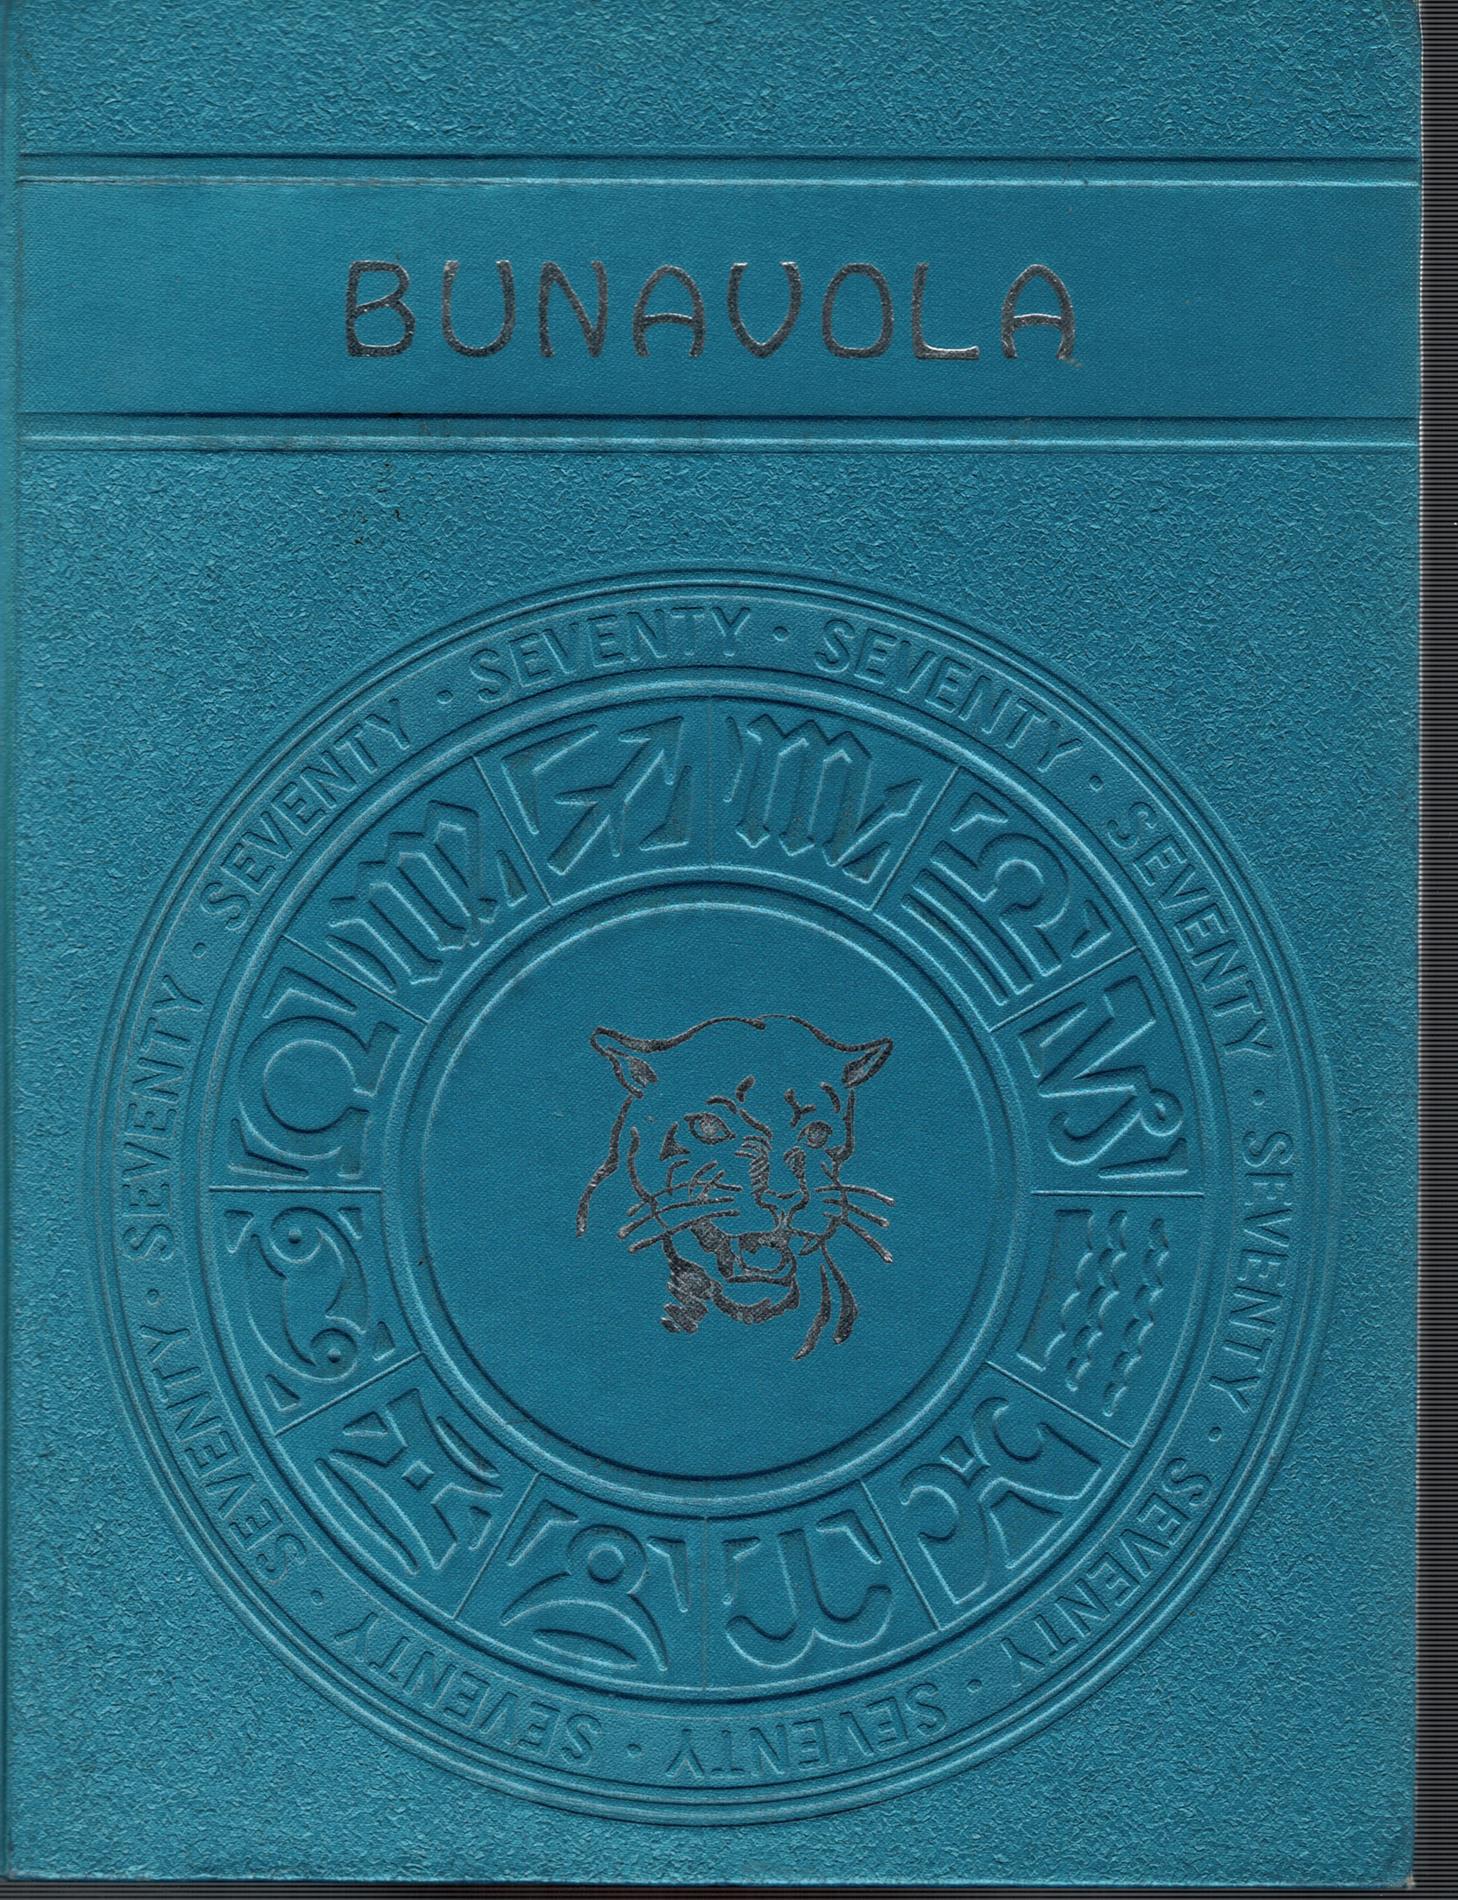 1970 Bunavola